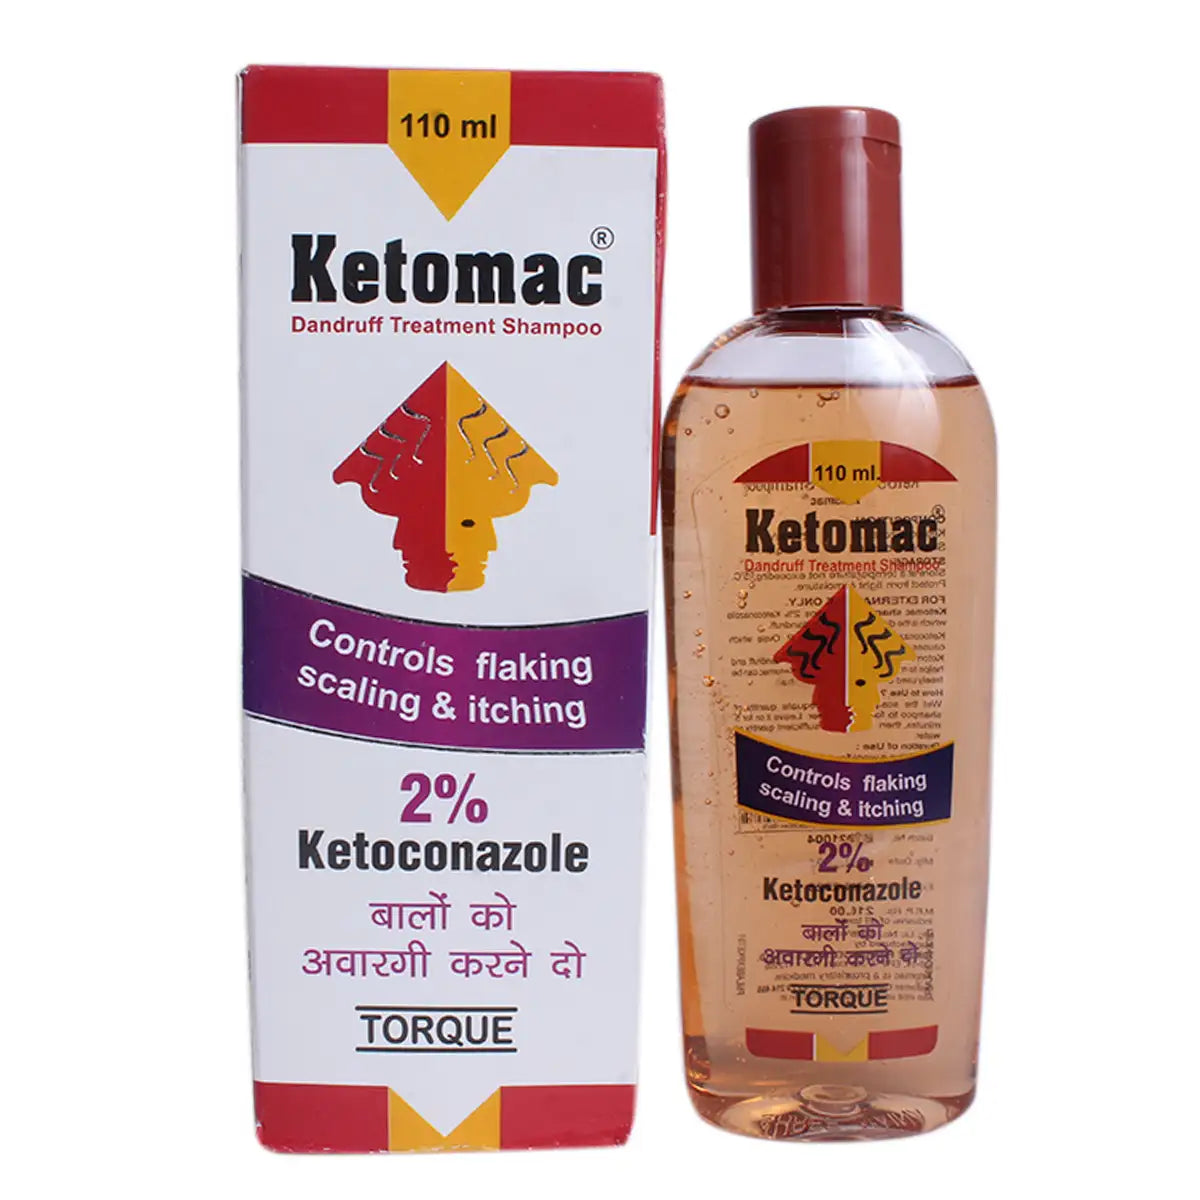 Ketomac Dandruff Treatment Shampoo- 110ml